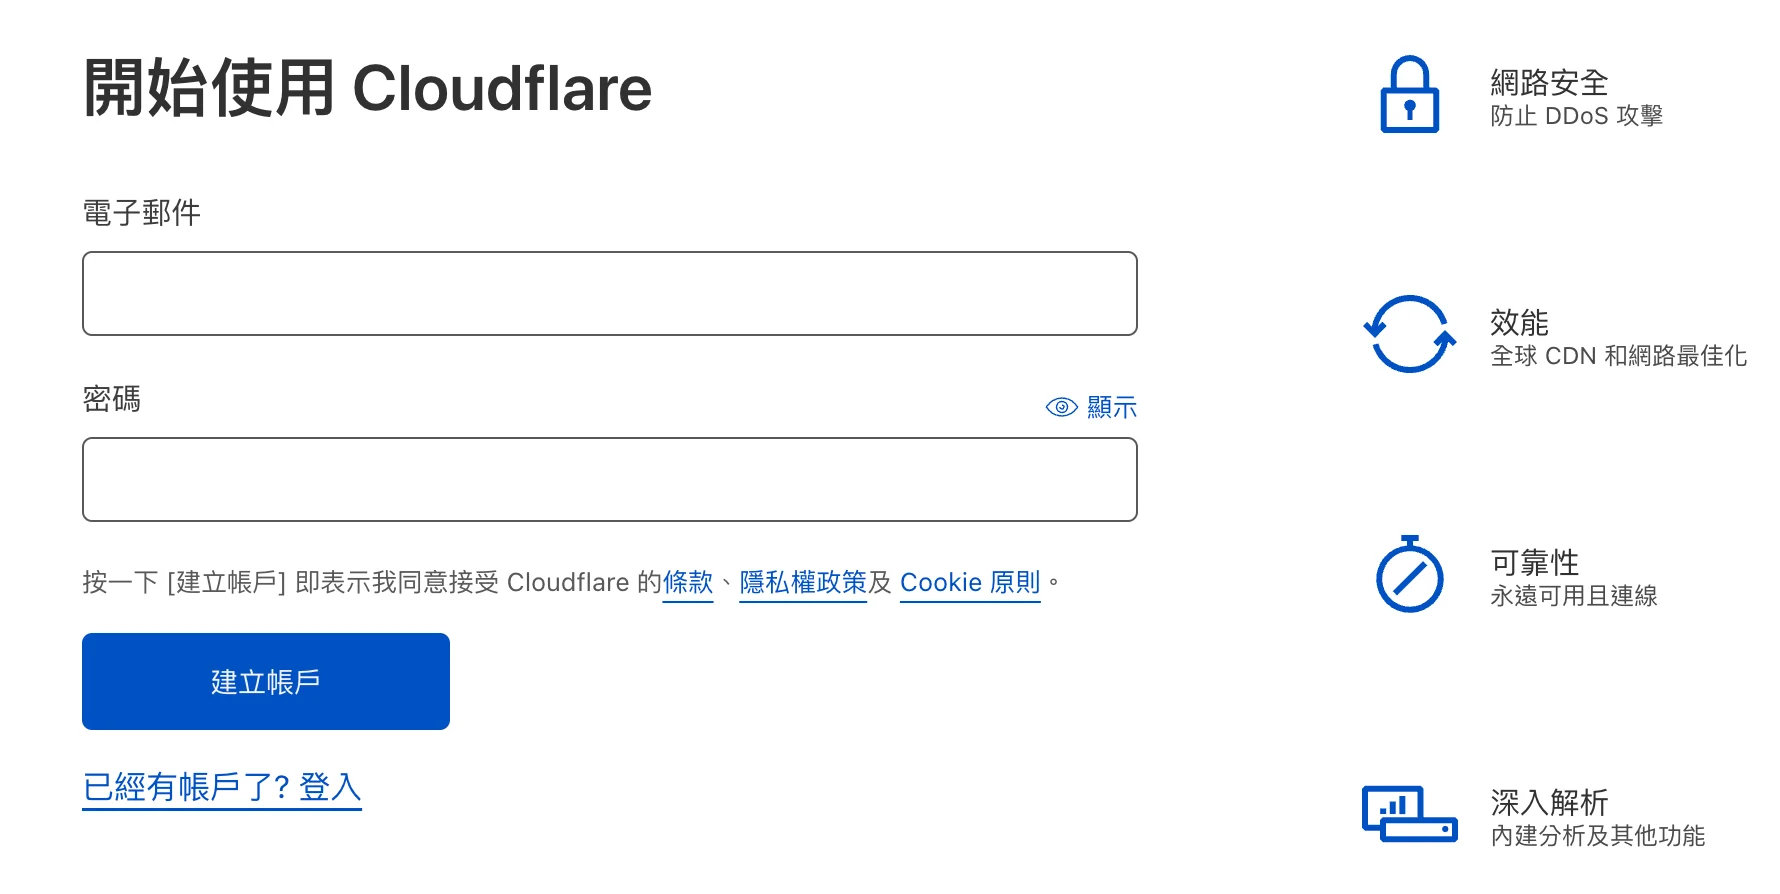 【Cloudways獨享】Cloudflare Enterprise CDN，每月150台幣就可享受飆速快感！ 12